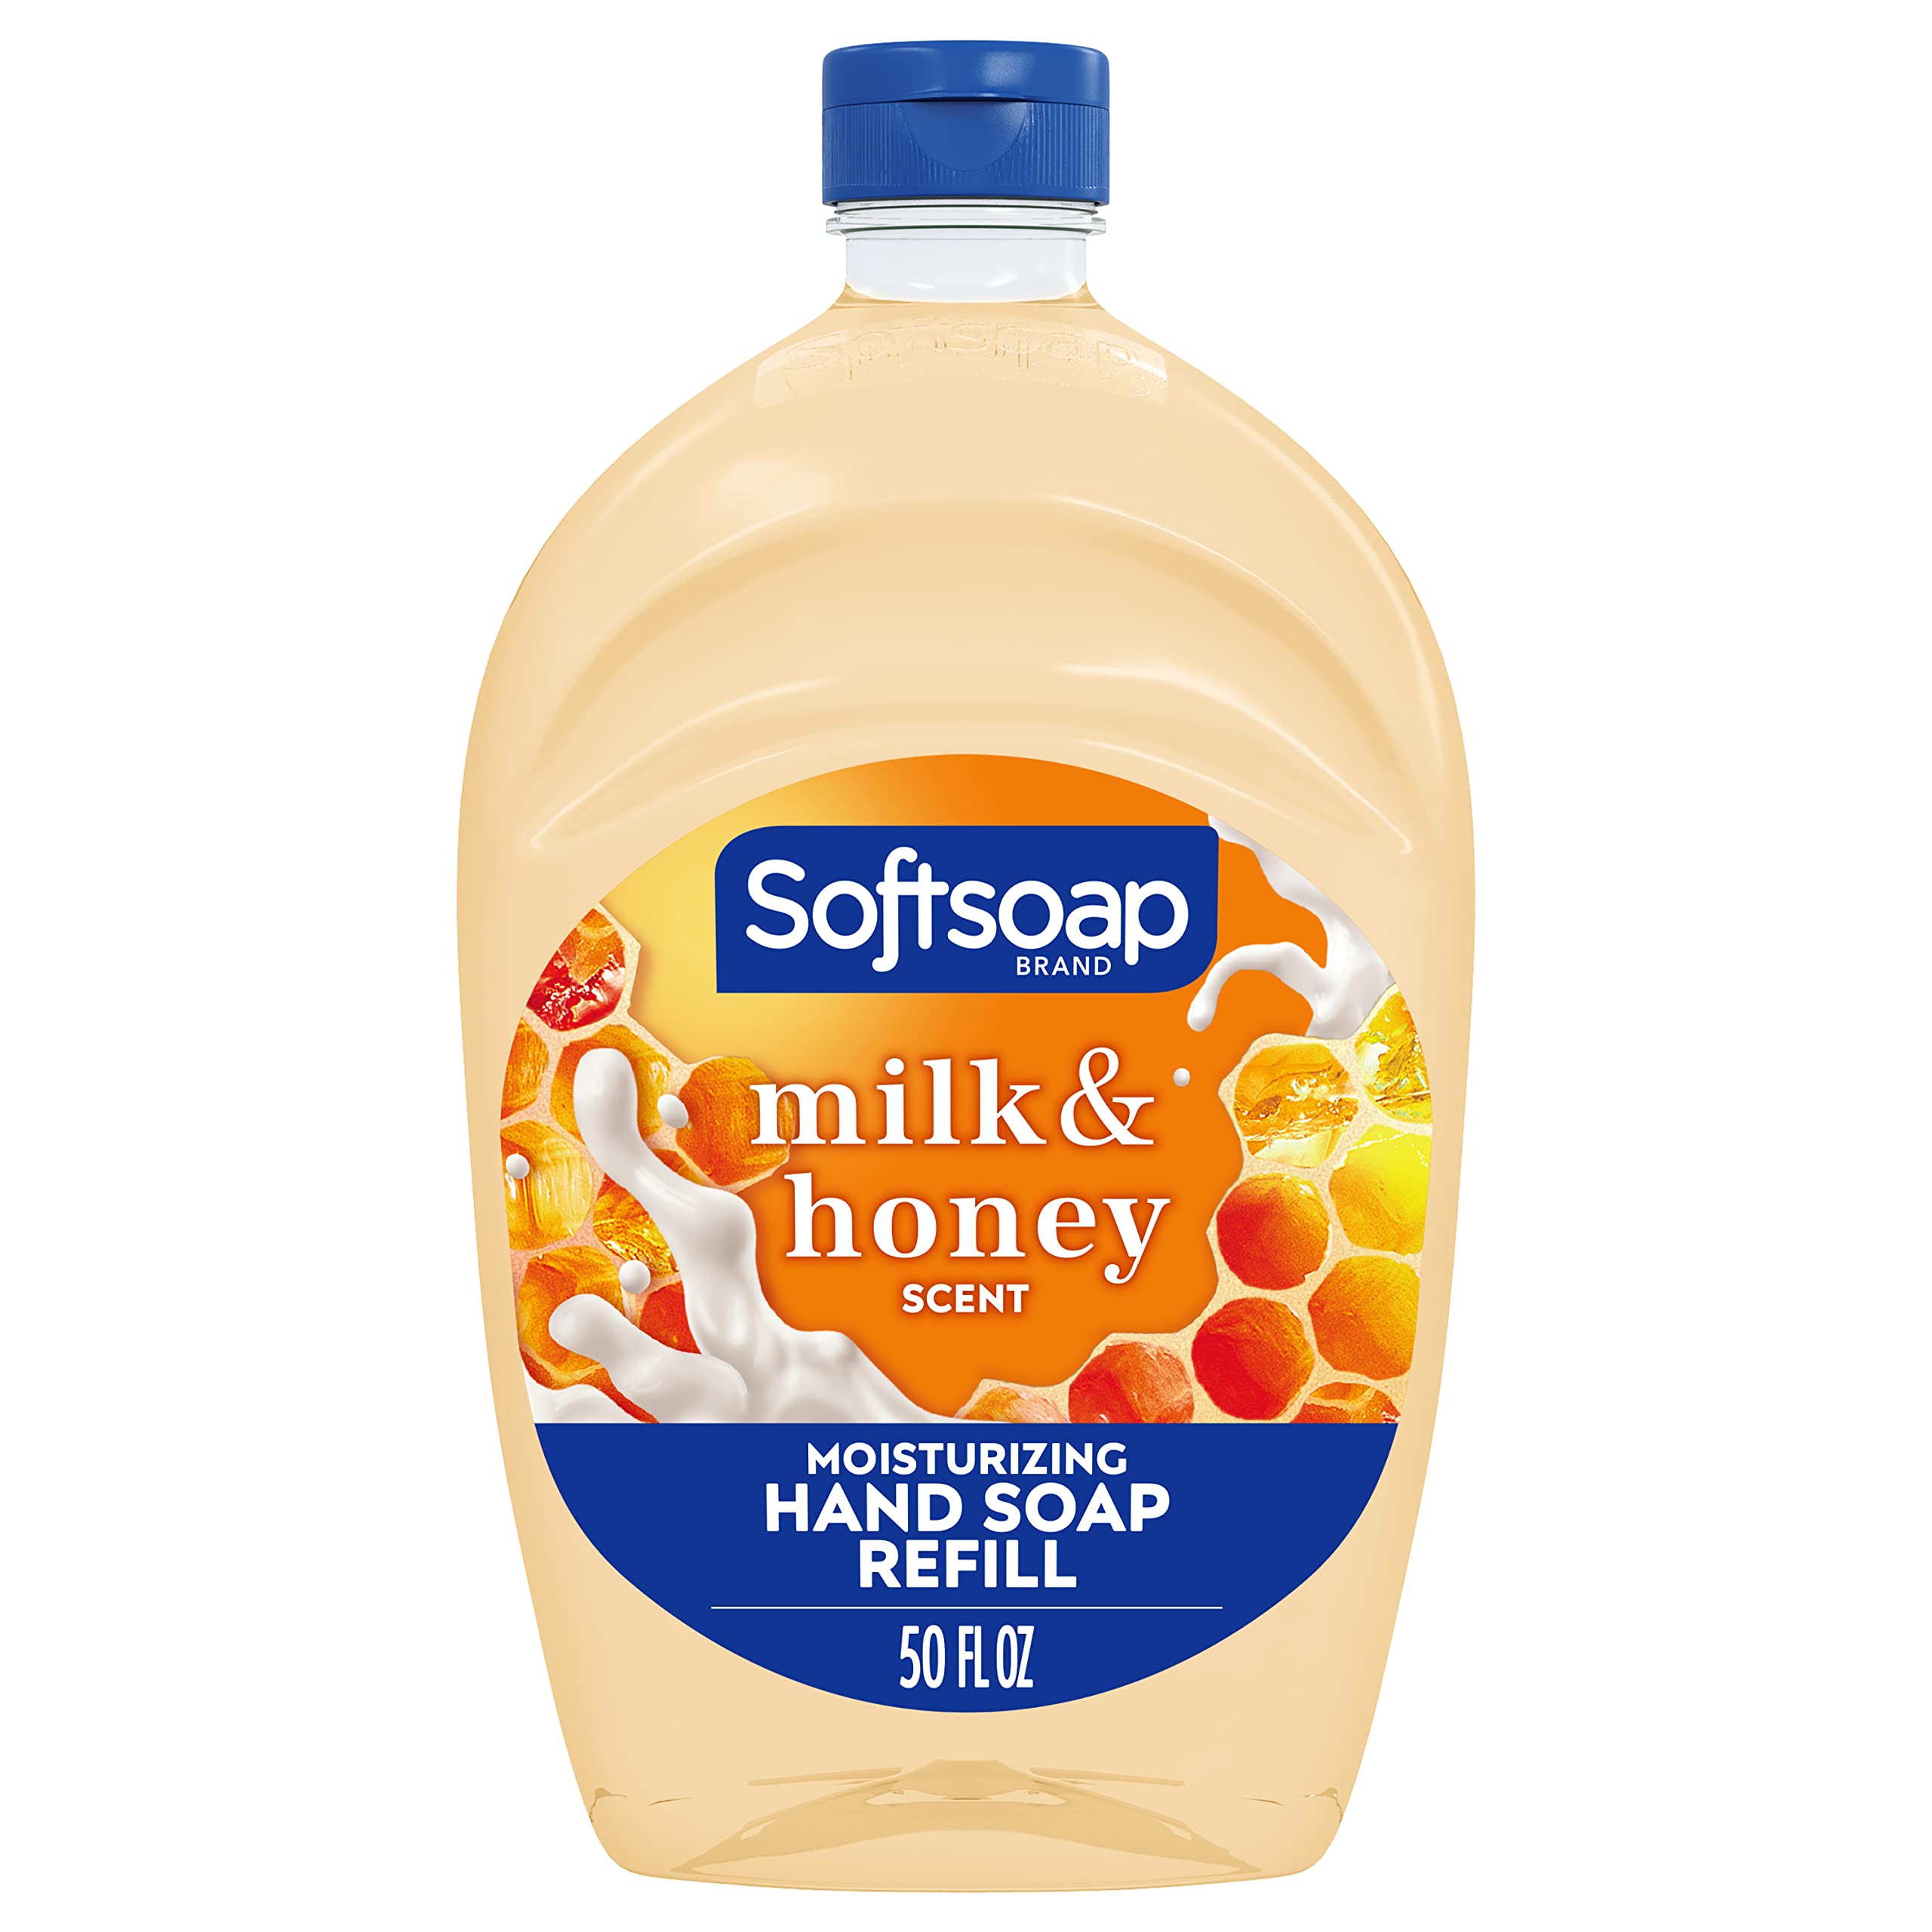 50-Oz Softsoap Liquid Hand Soap Refill (Milk & Honey / White Tea & Berry) $4.74 + Free Shipping w/ Prime or on $25+